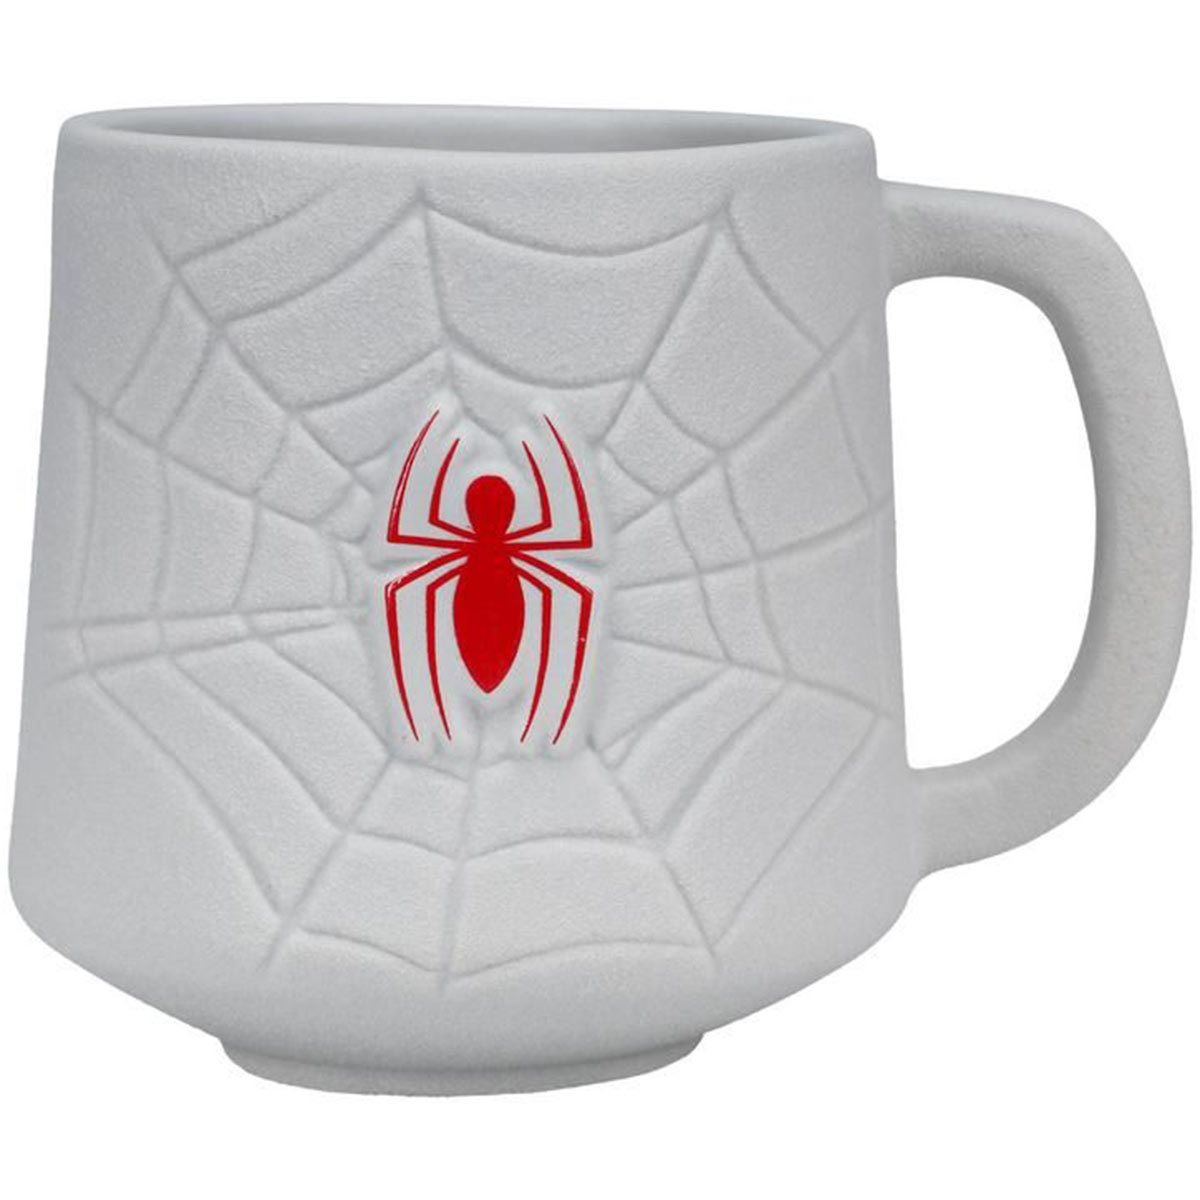 Spider-Man Eyes 14oz Mug